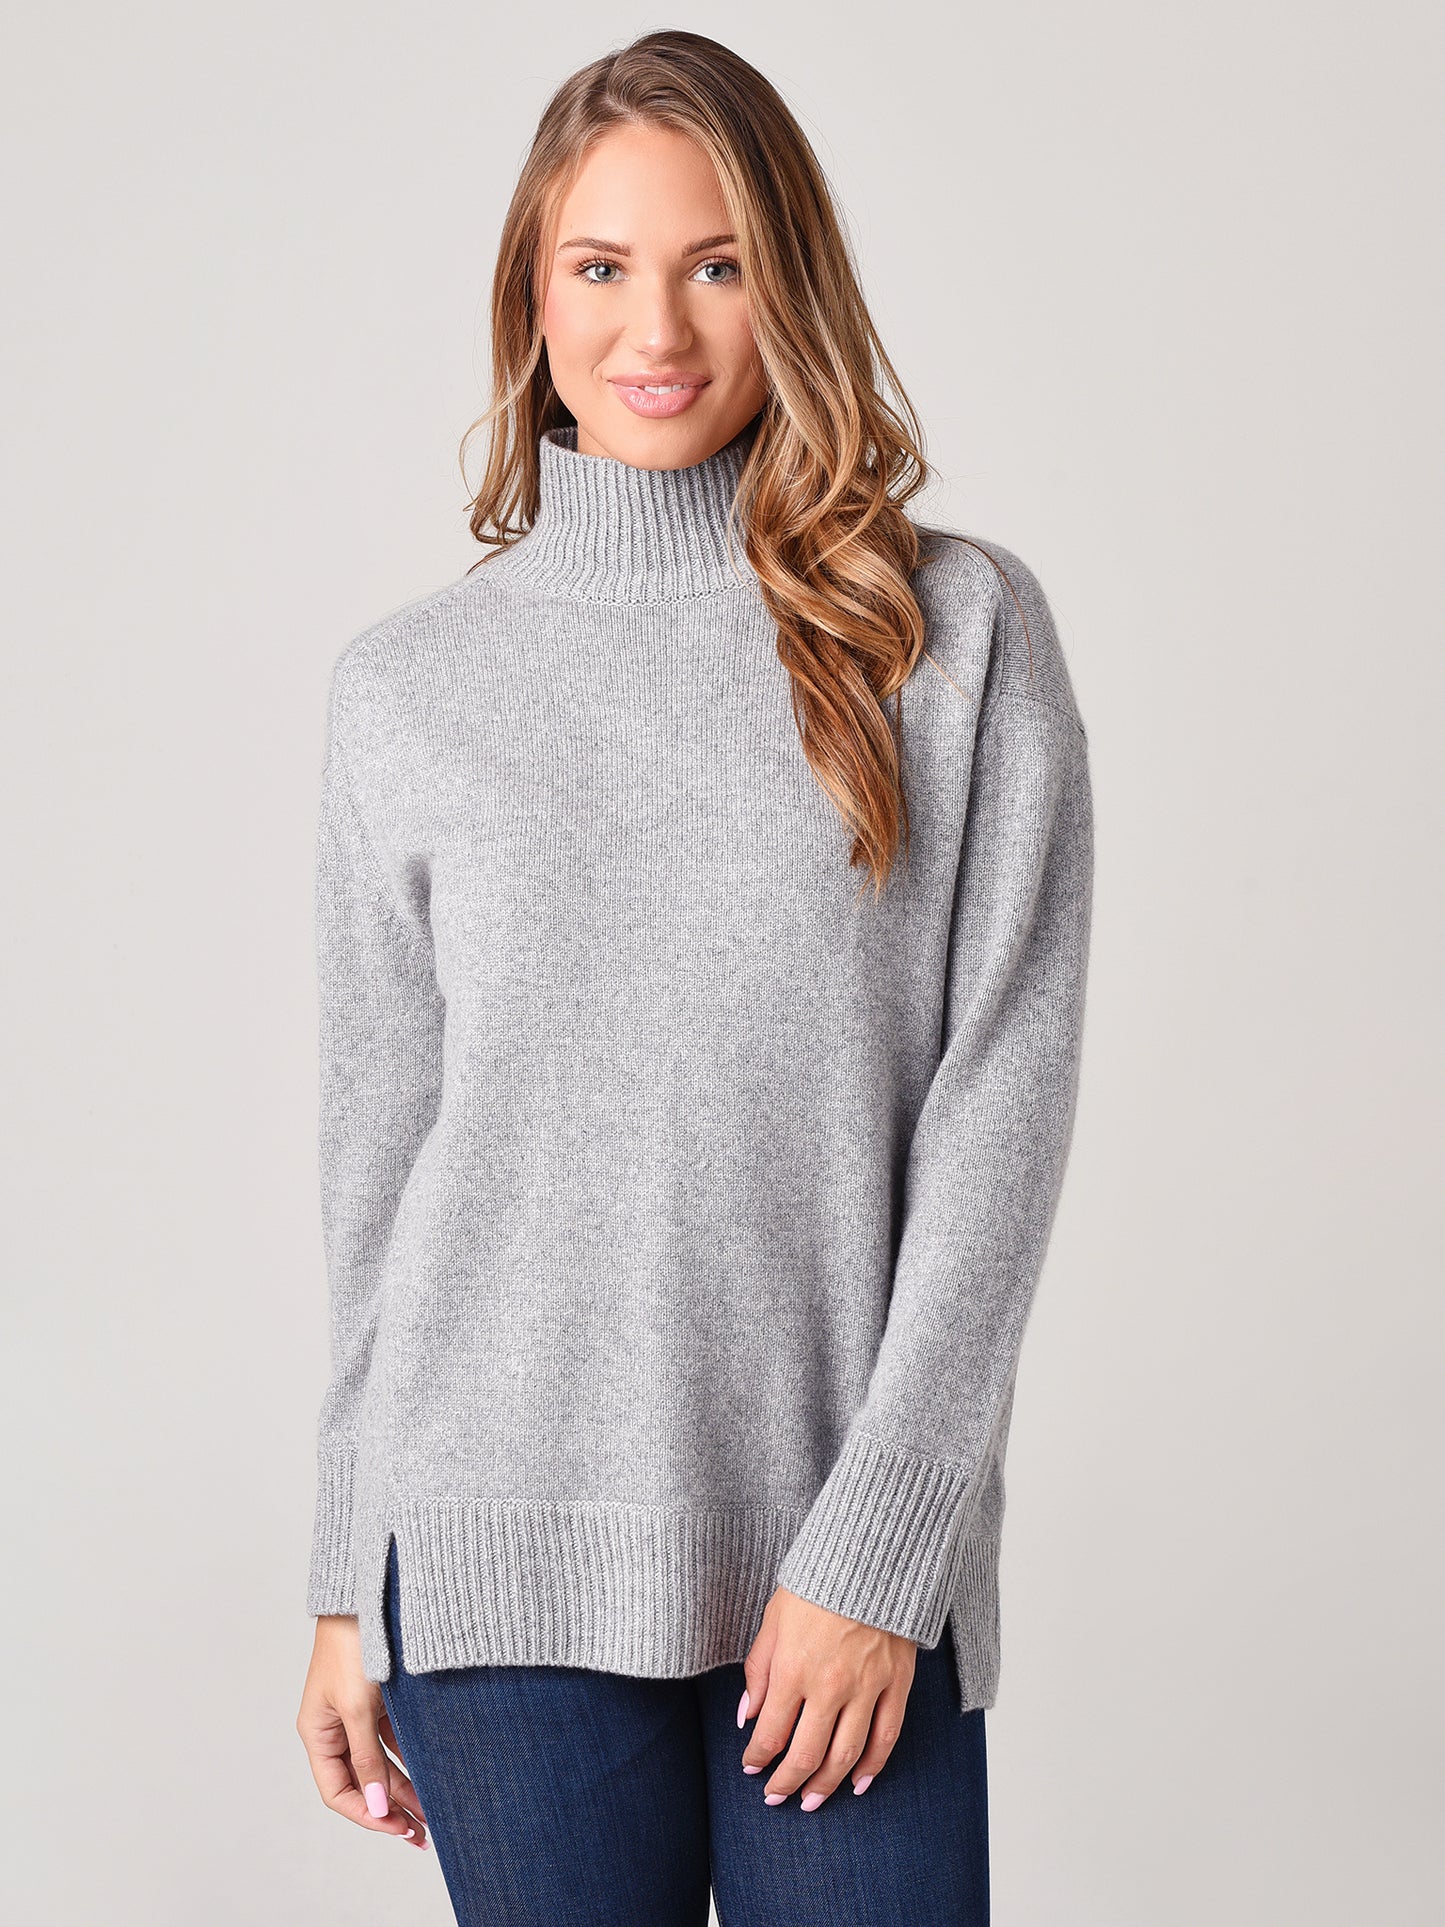 Vince Women's Double Slit Turtleneck Sweater